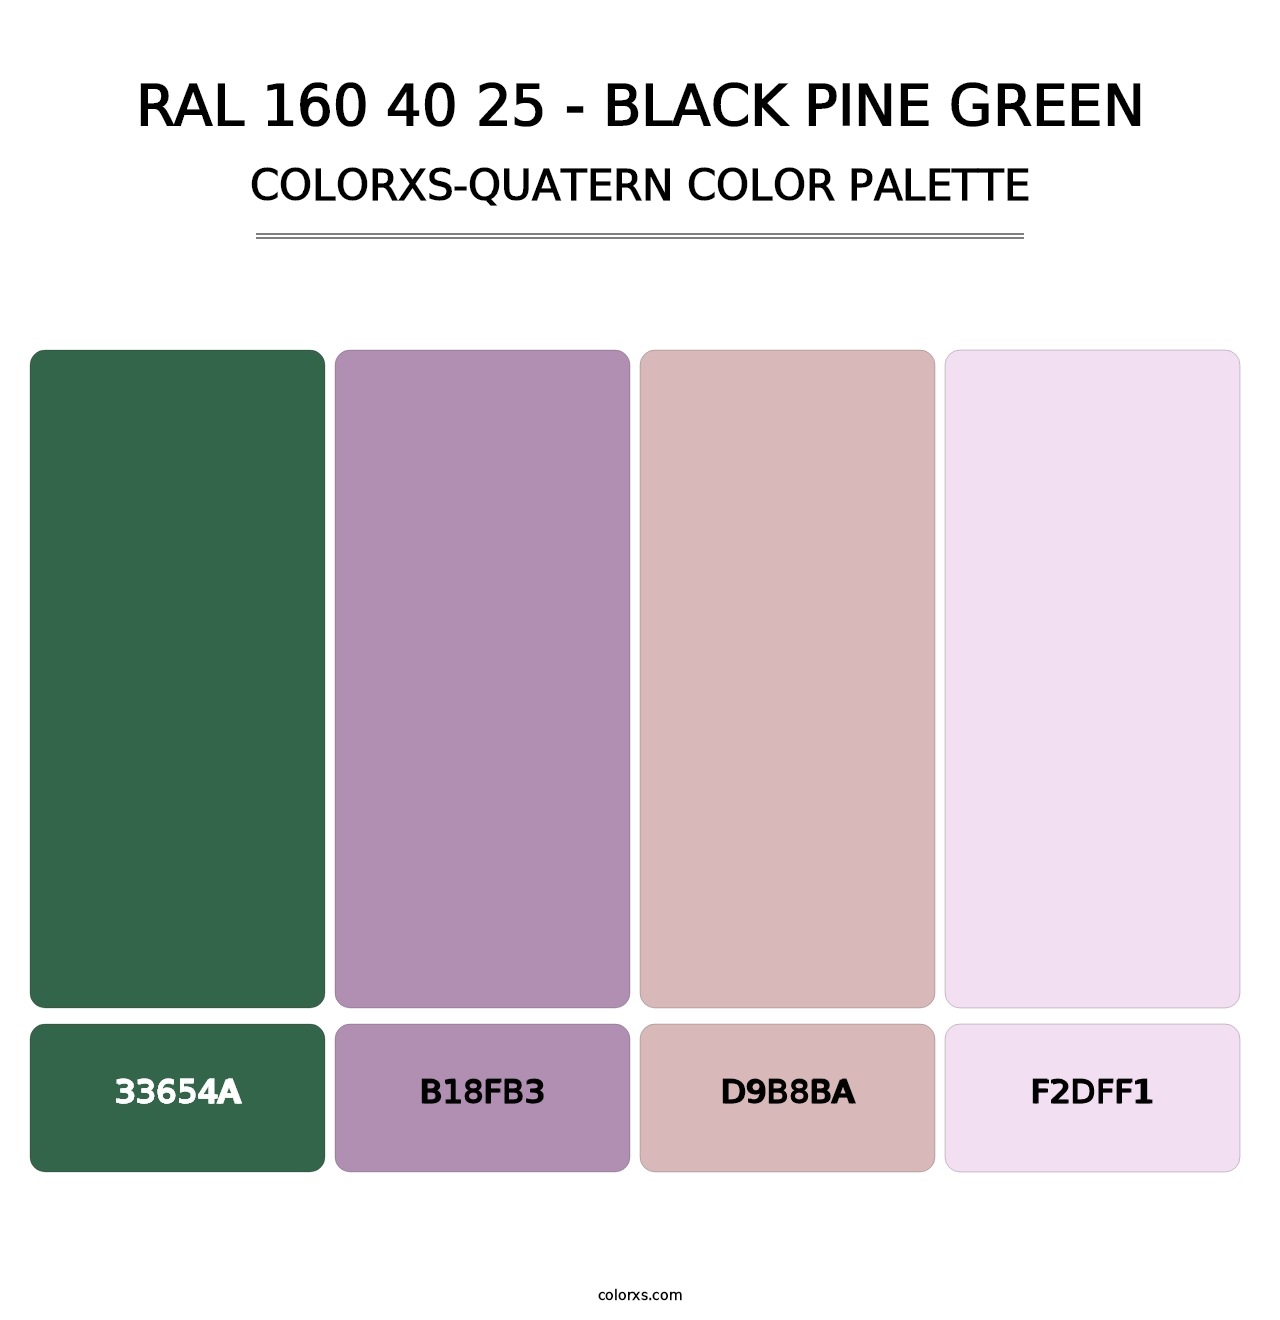 RAL 160 40 25 - Black Pine Green - Colorxs Quatern Palette